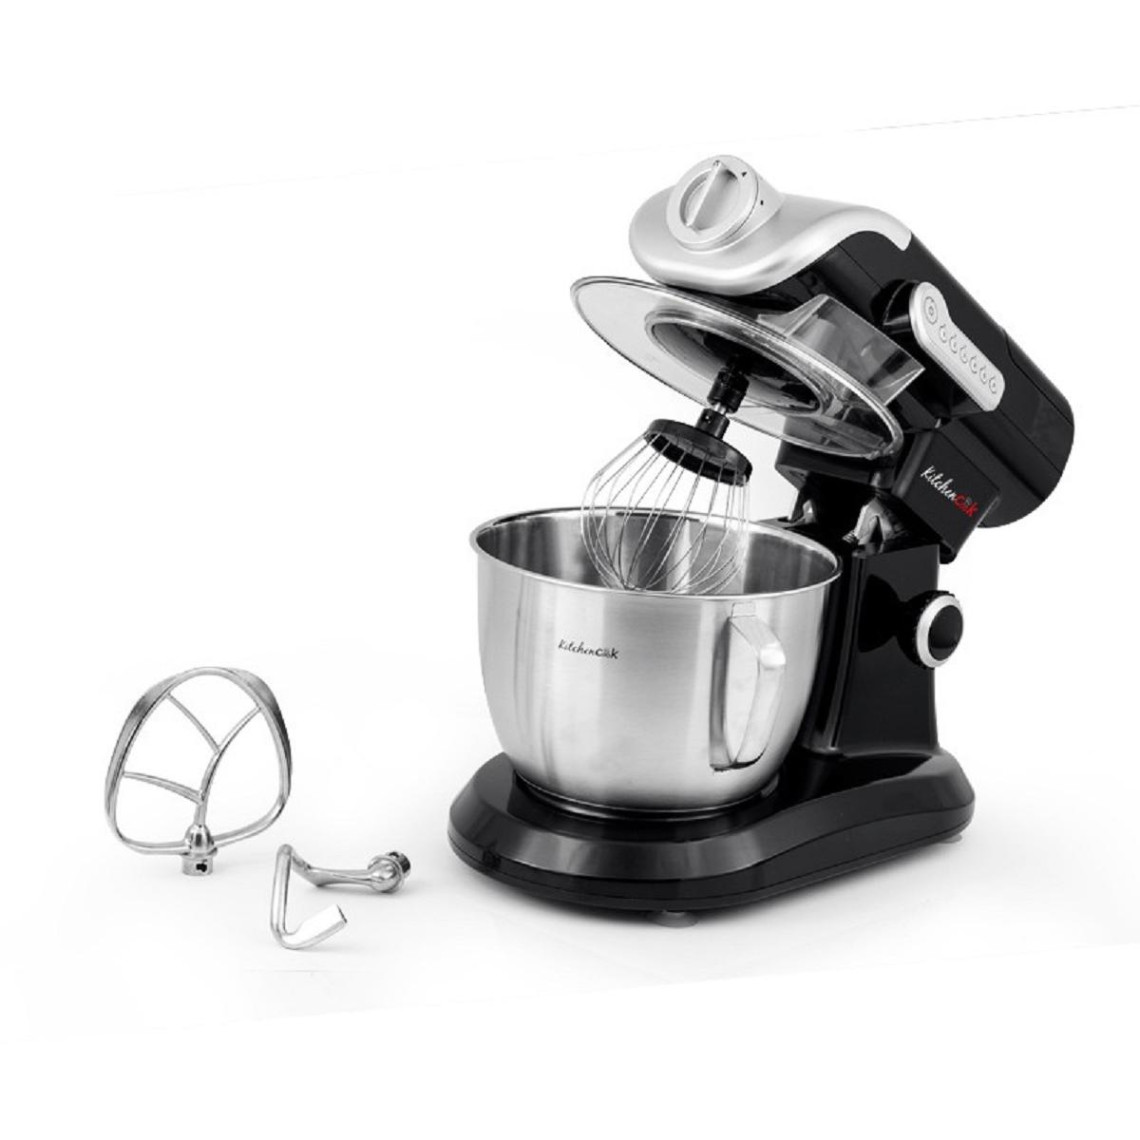 Kitchencook Robot pétrin multifonction Evolution - 1000W - Noir